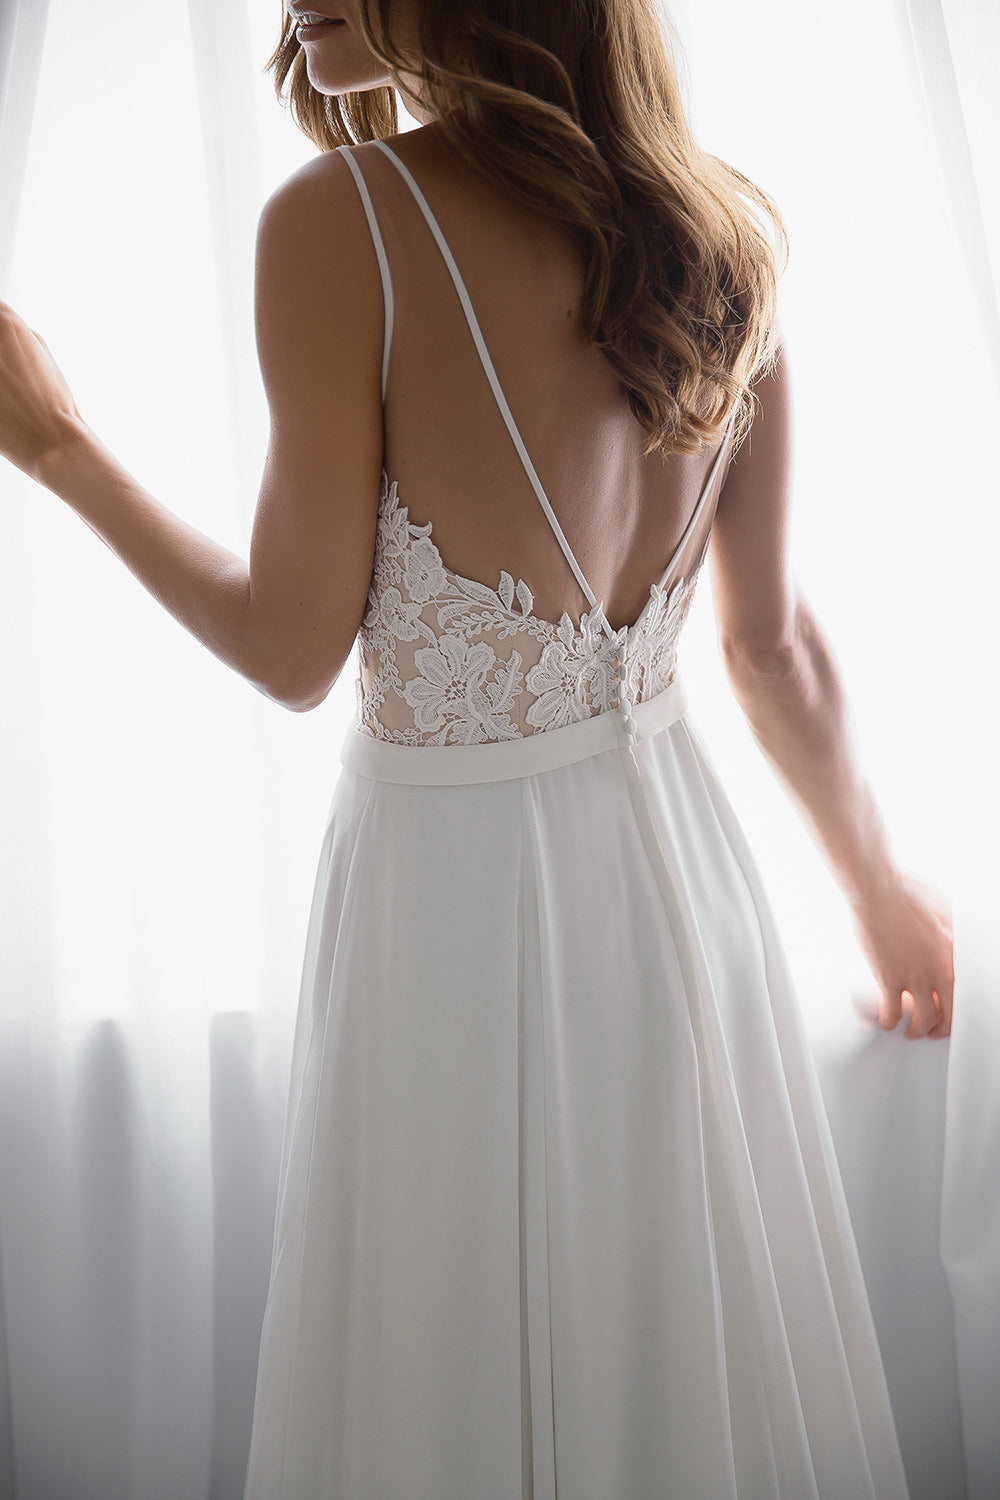 *NEW* Rings Designer Wedding Gown - #55011